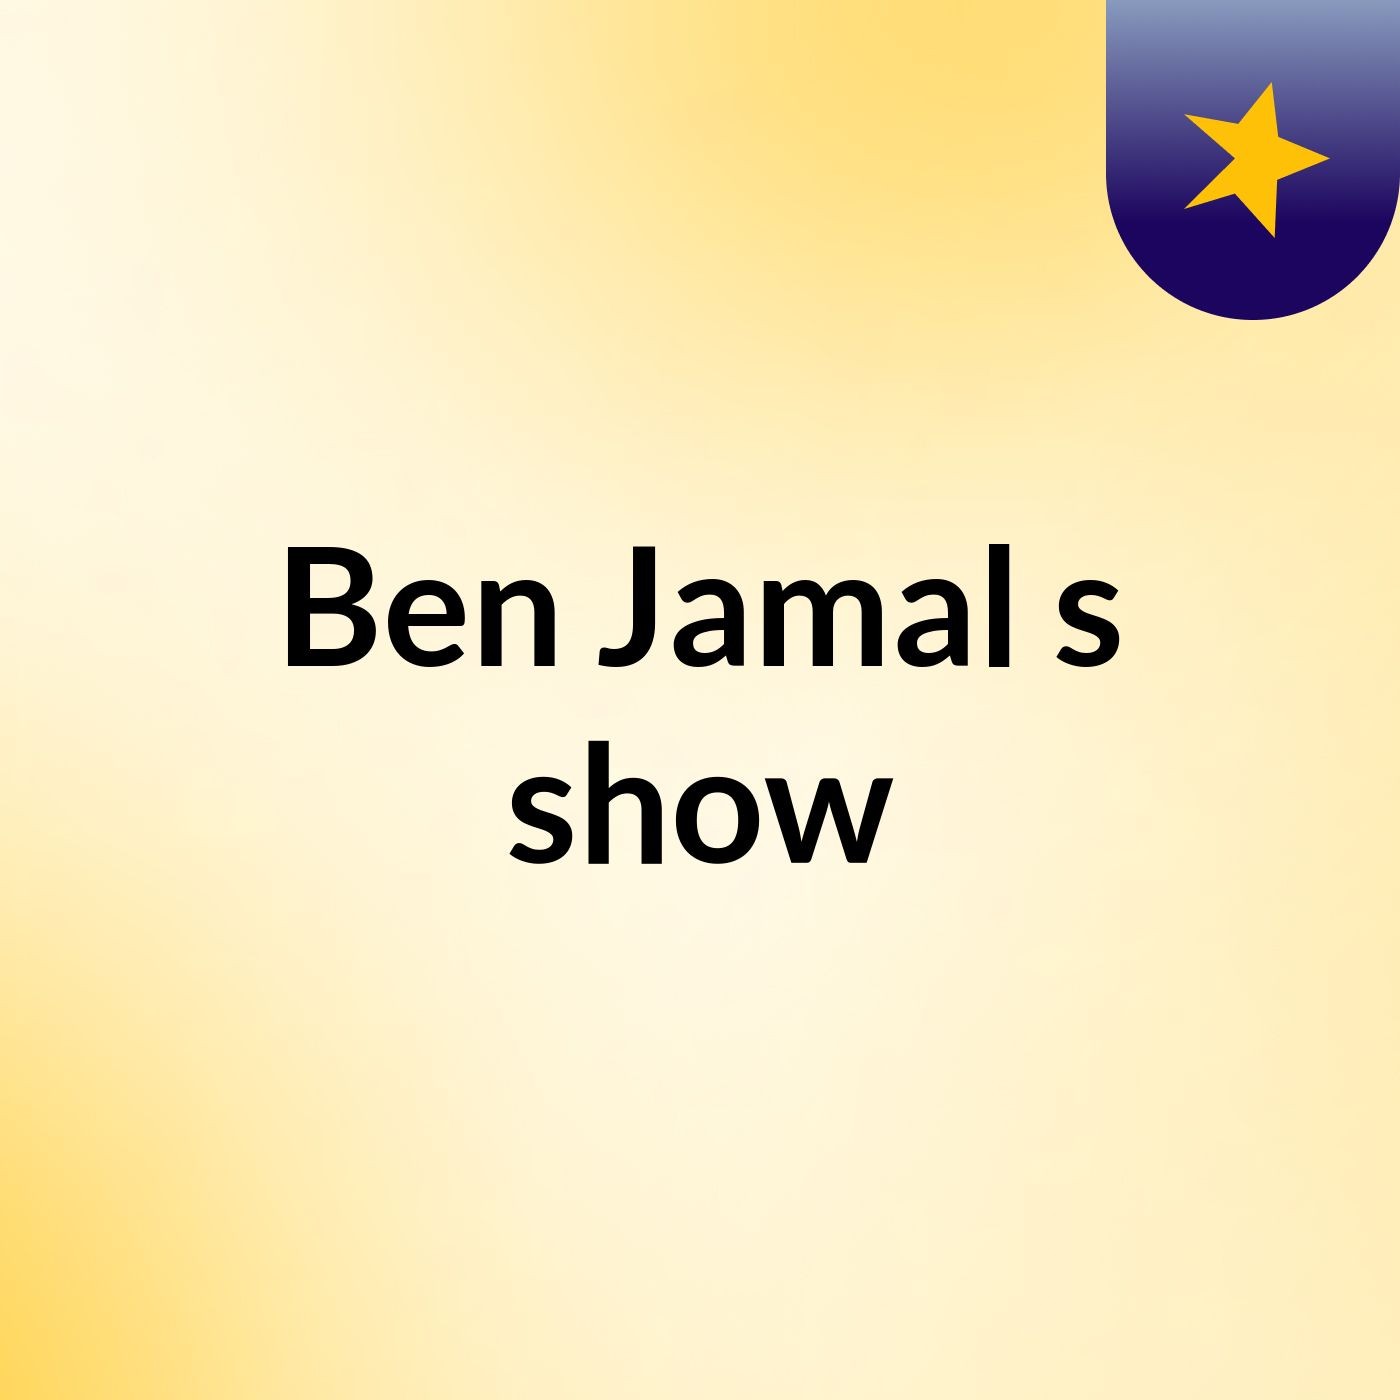 Ben Jamal's show